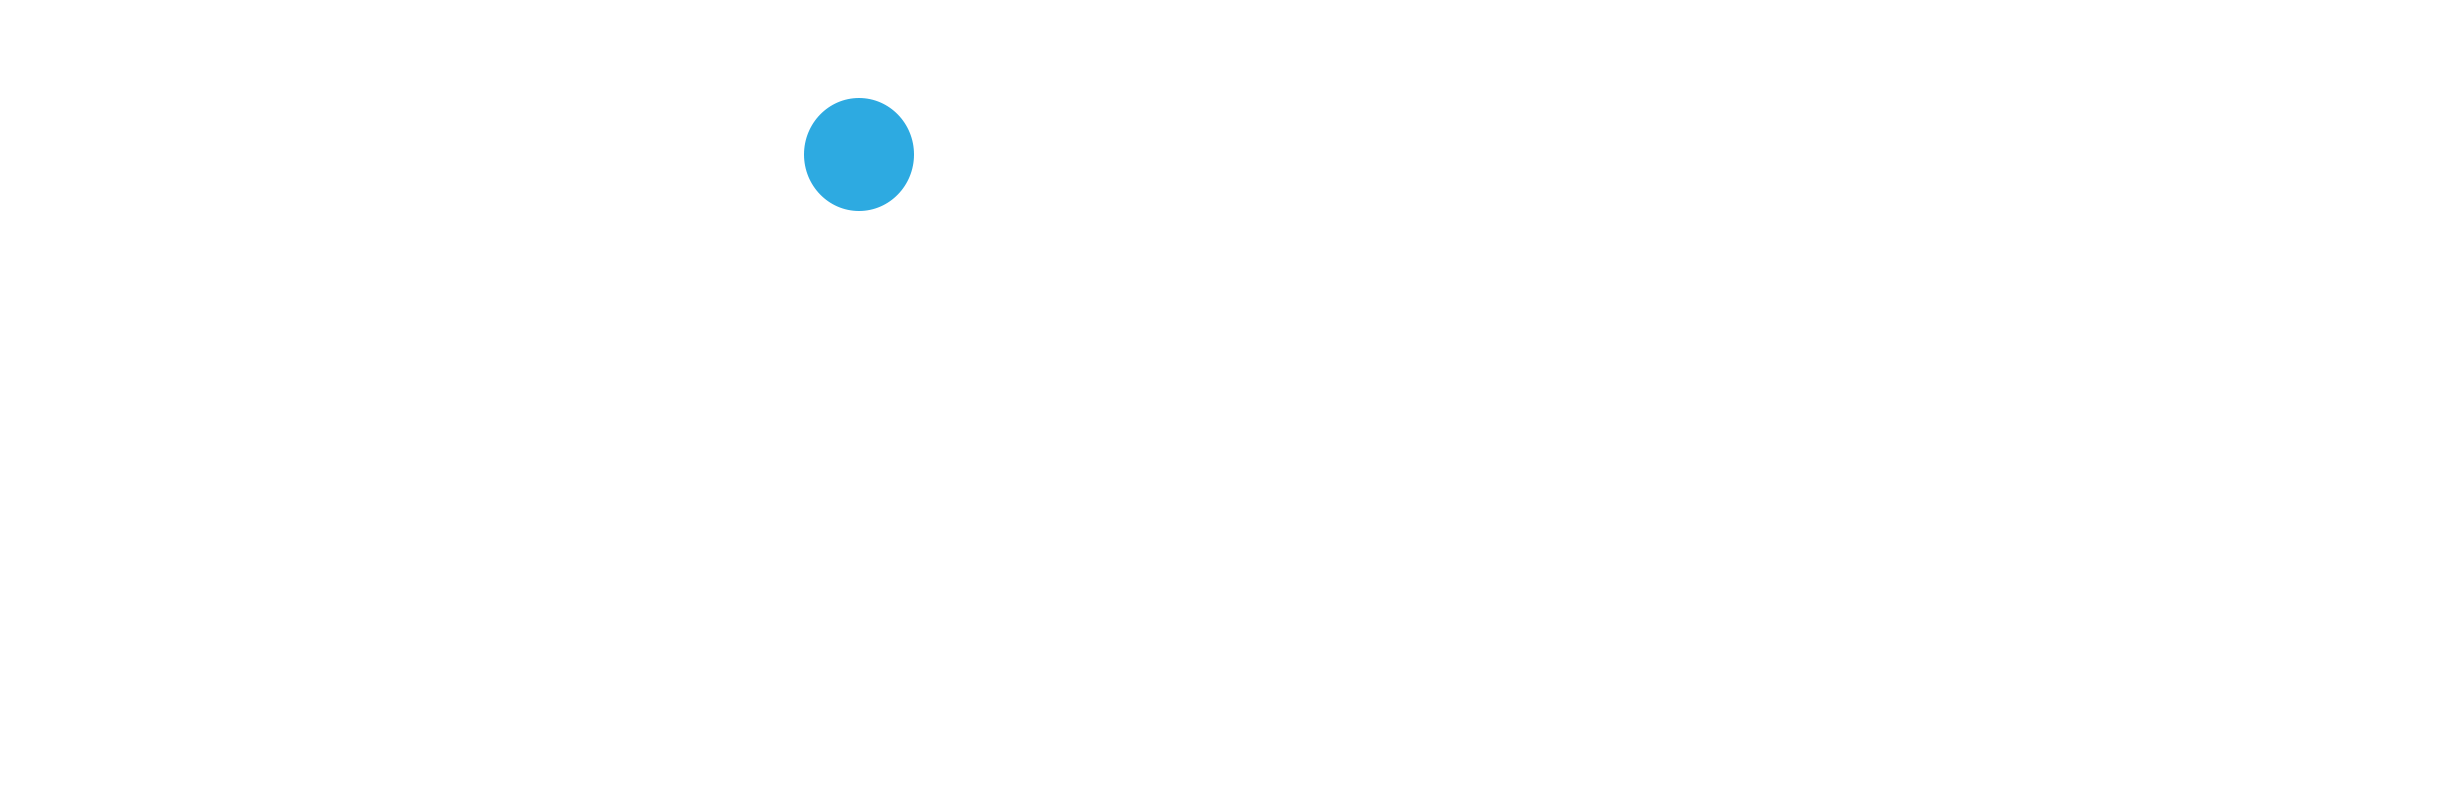 nurpn logo w